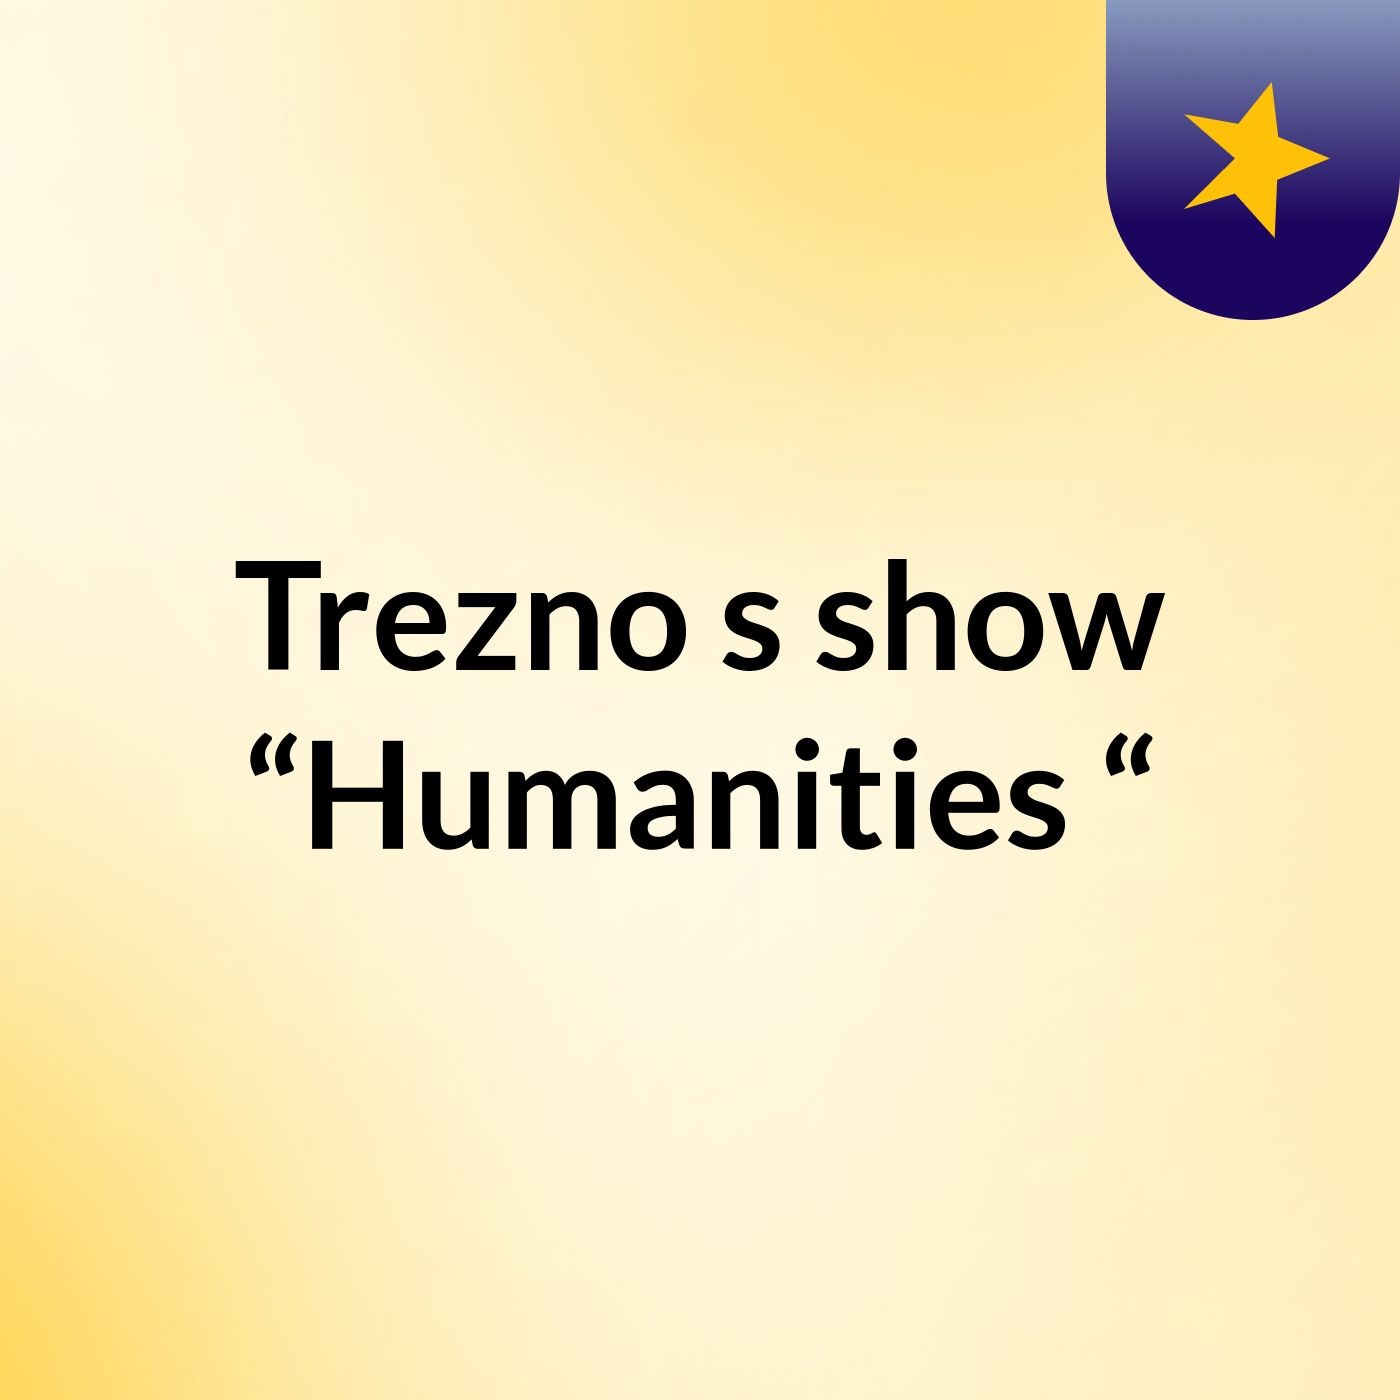 Trezno's show “Humanities “